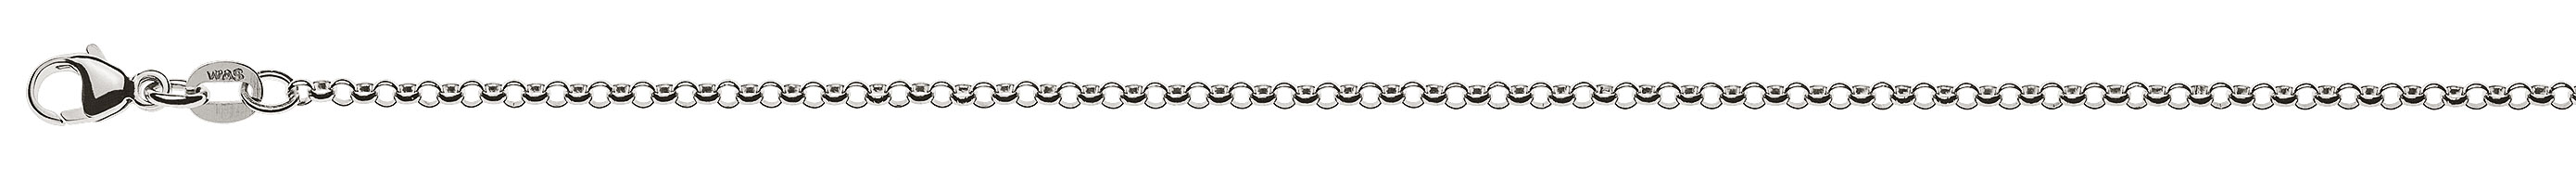 AURONOS Prestige Necklace white gold 18K pea chain 50cm 2.0mm